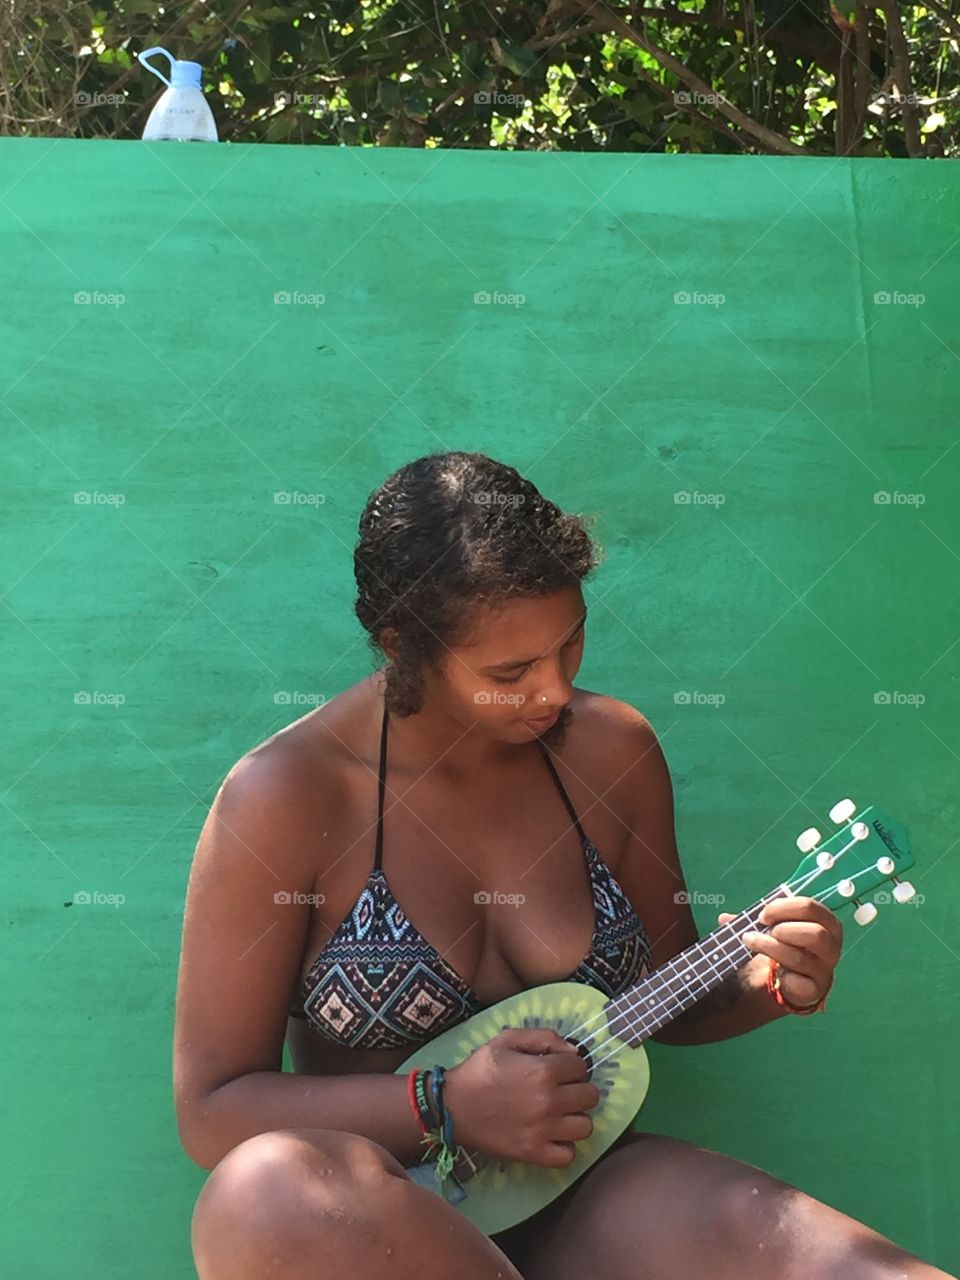 Playing the ukulele against the perfect backdrop